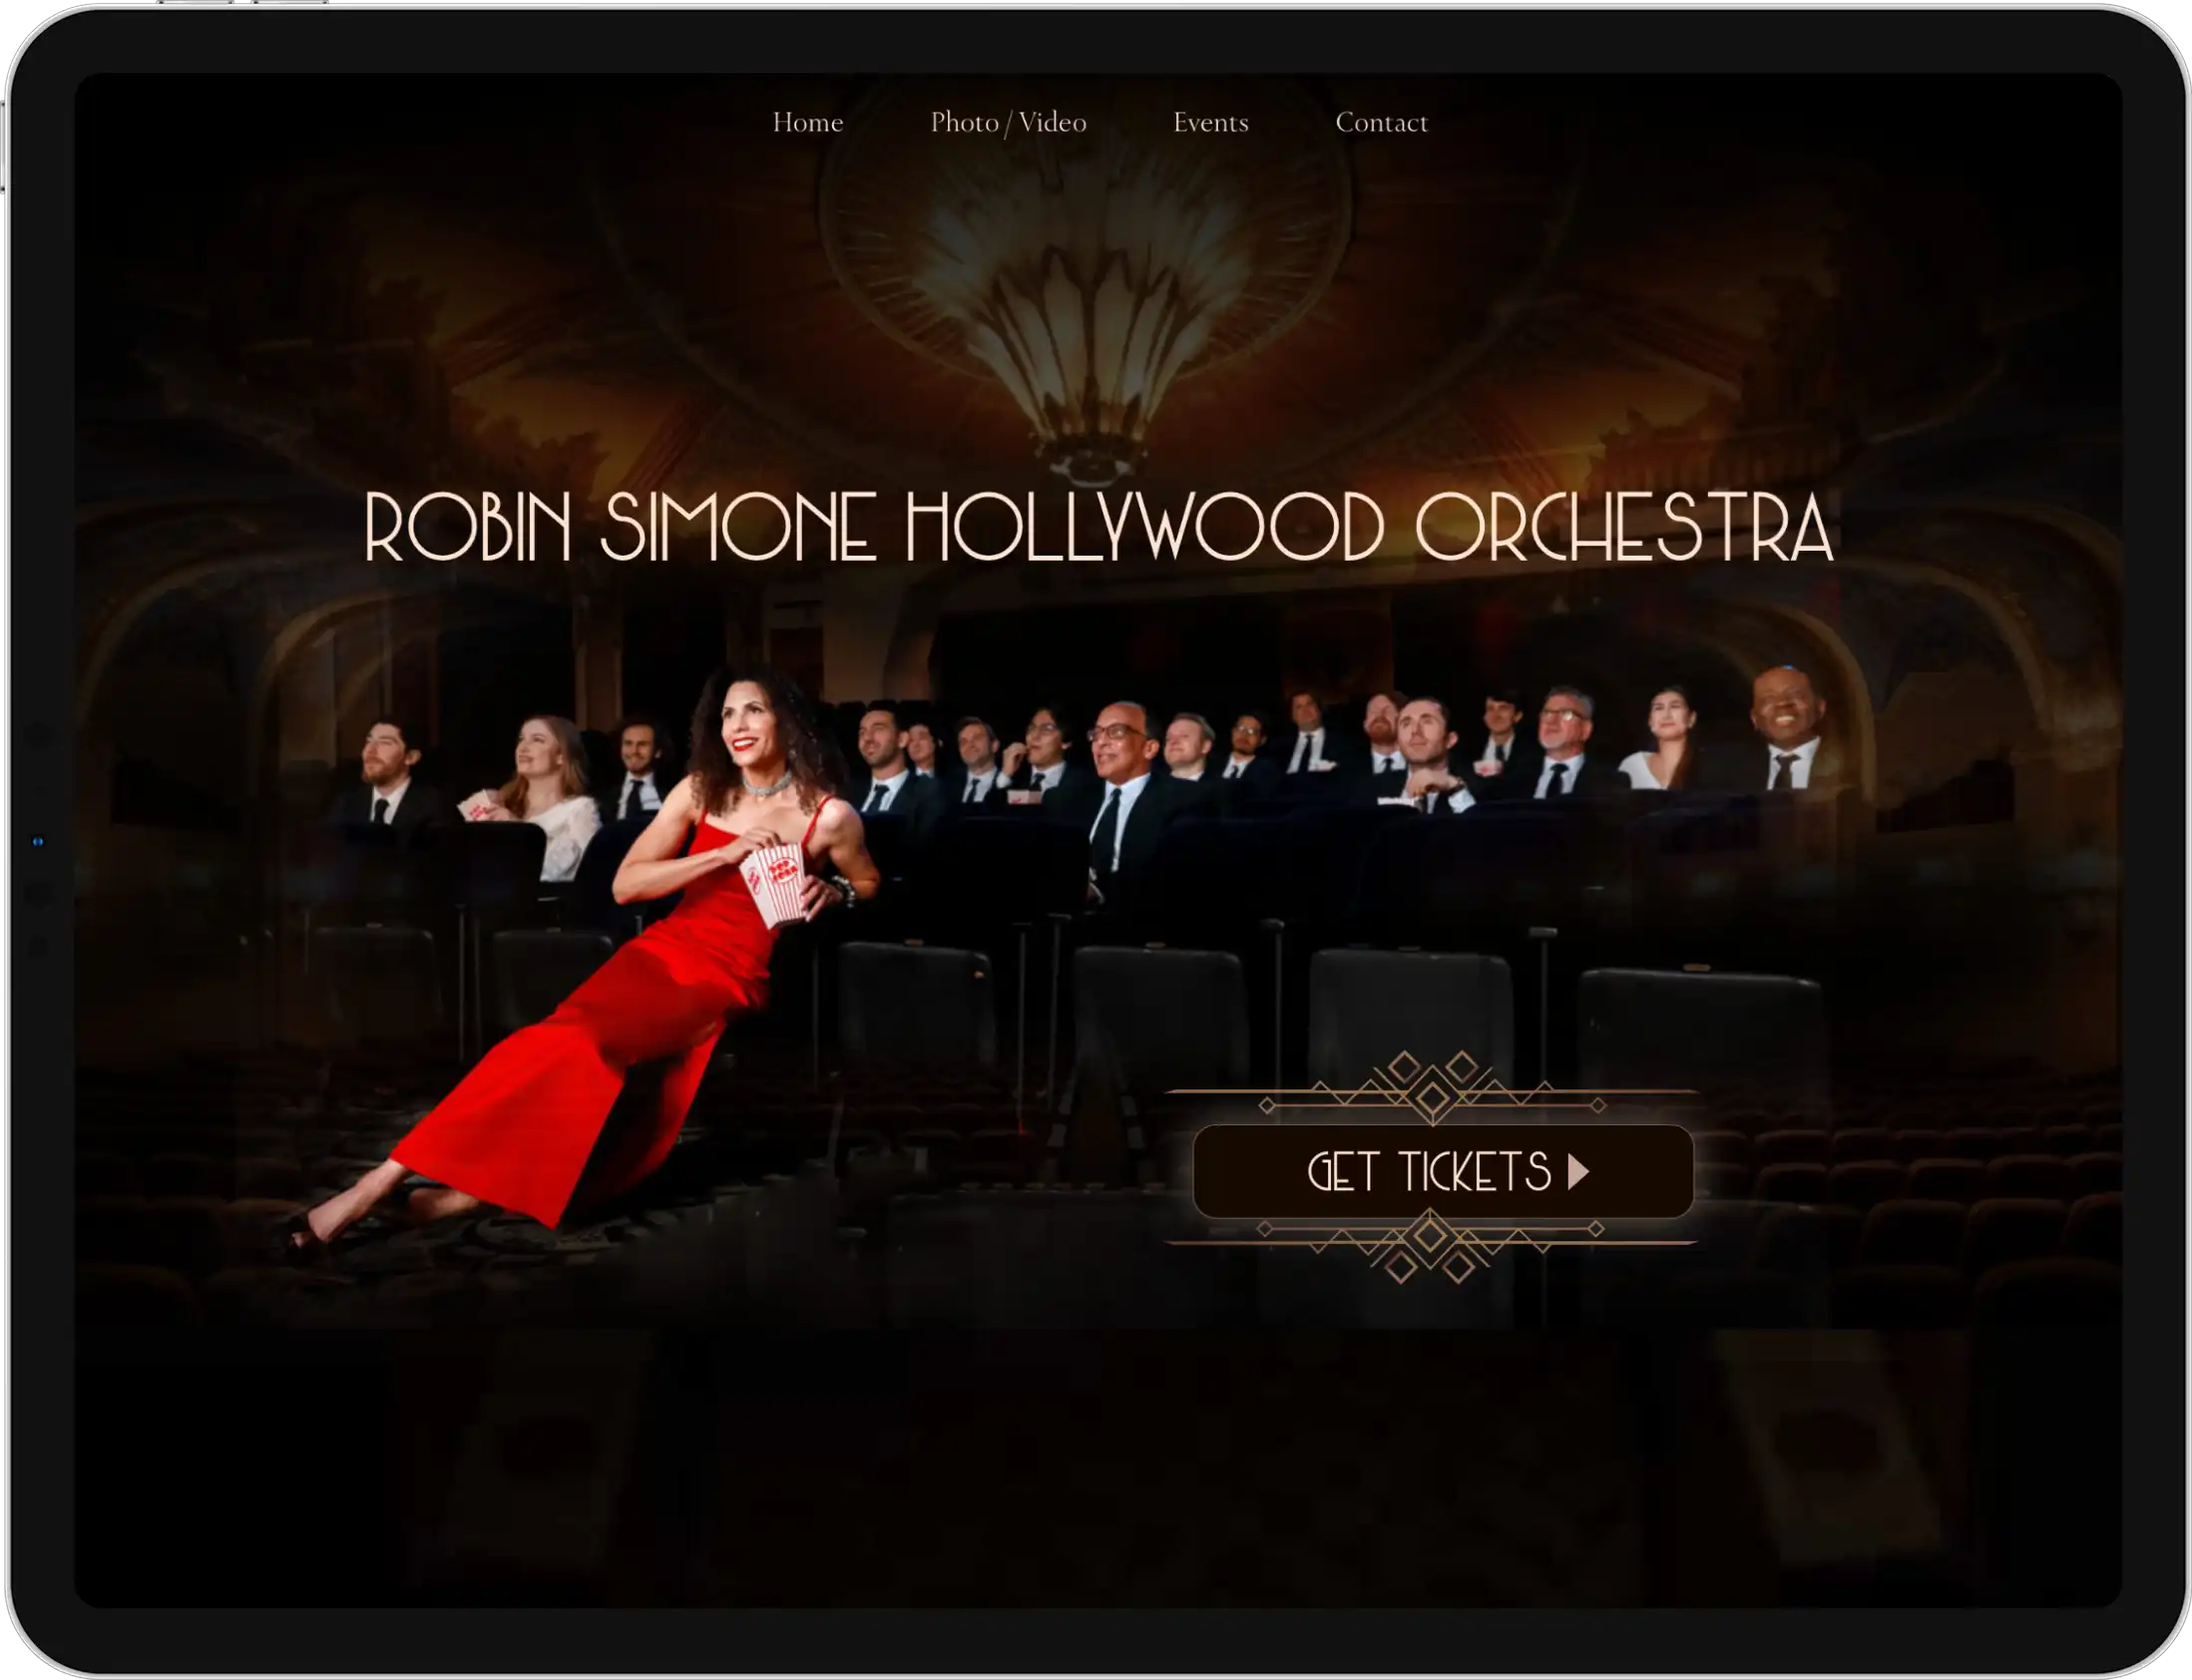 Robin Simone Hollywood Orchestra Website